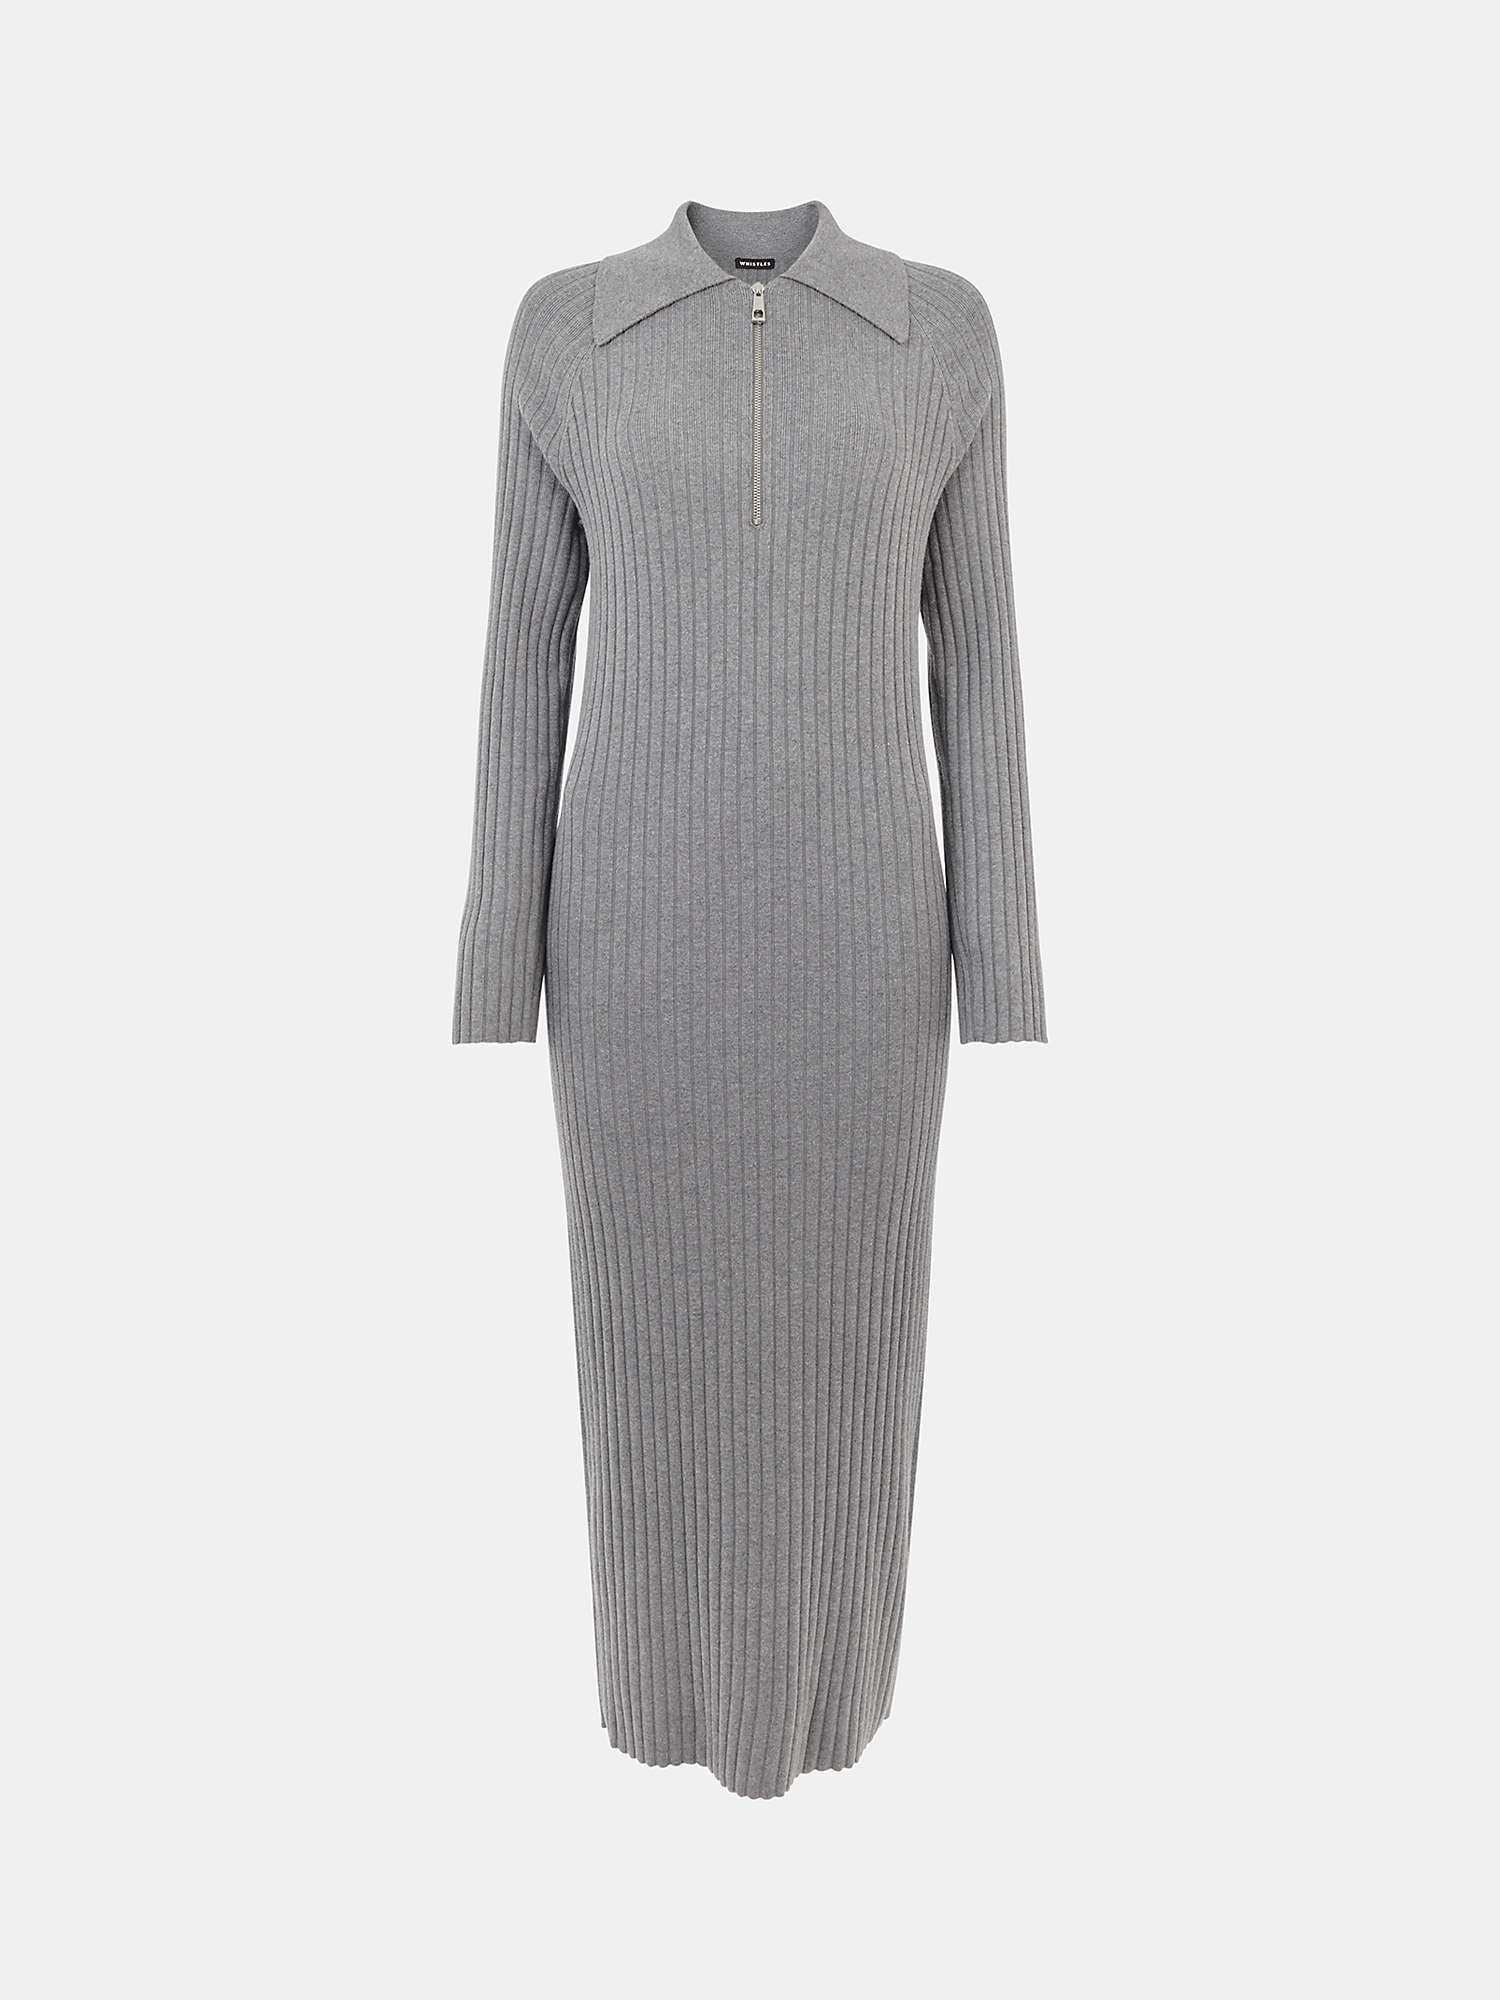 Whistles Bonnie Zip Ribbed Knit Dress, Dark Grey at John Lewis & Partners